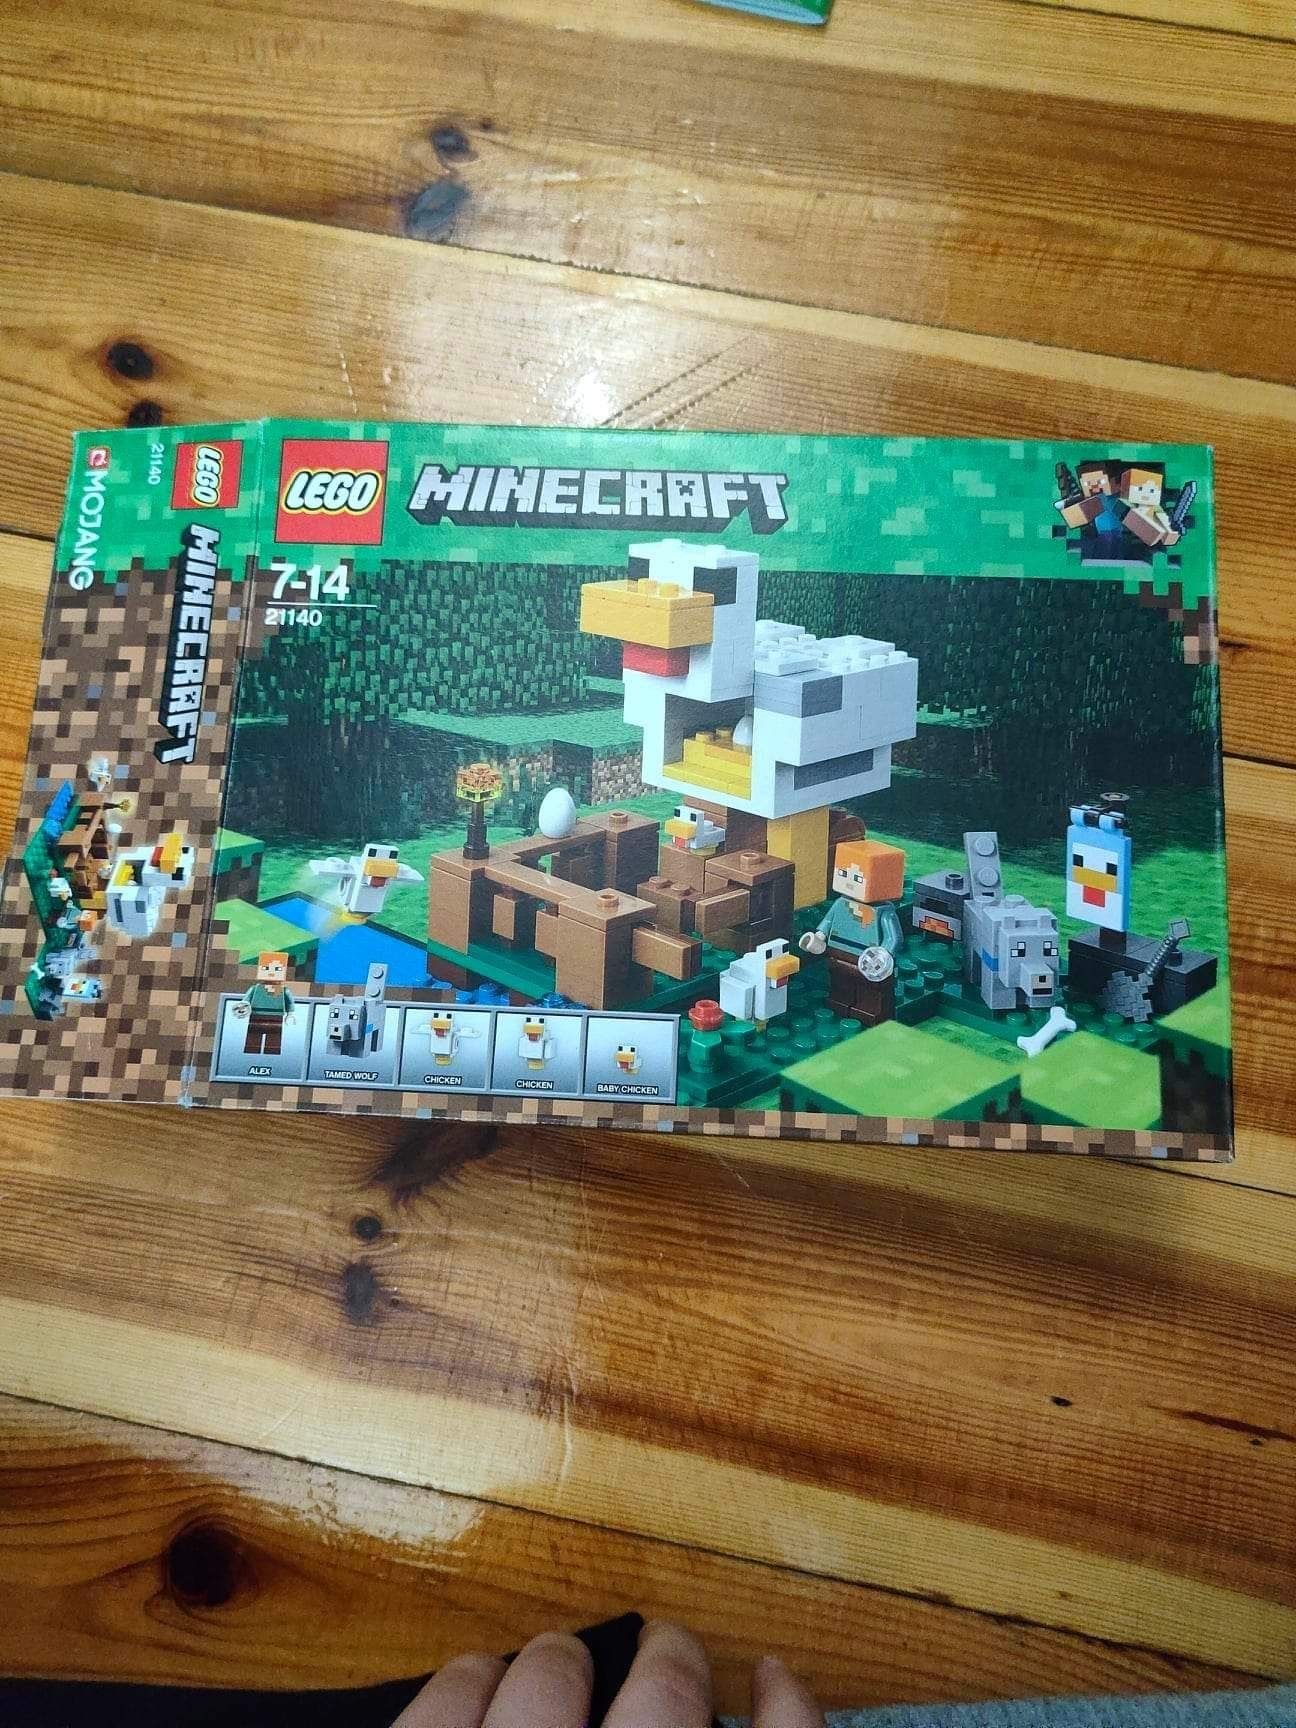 LEGO Minecraft Kurnik 21140